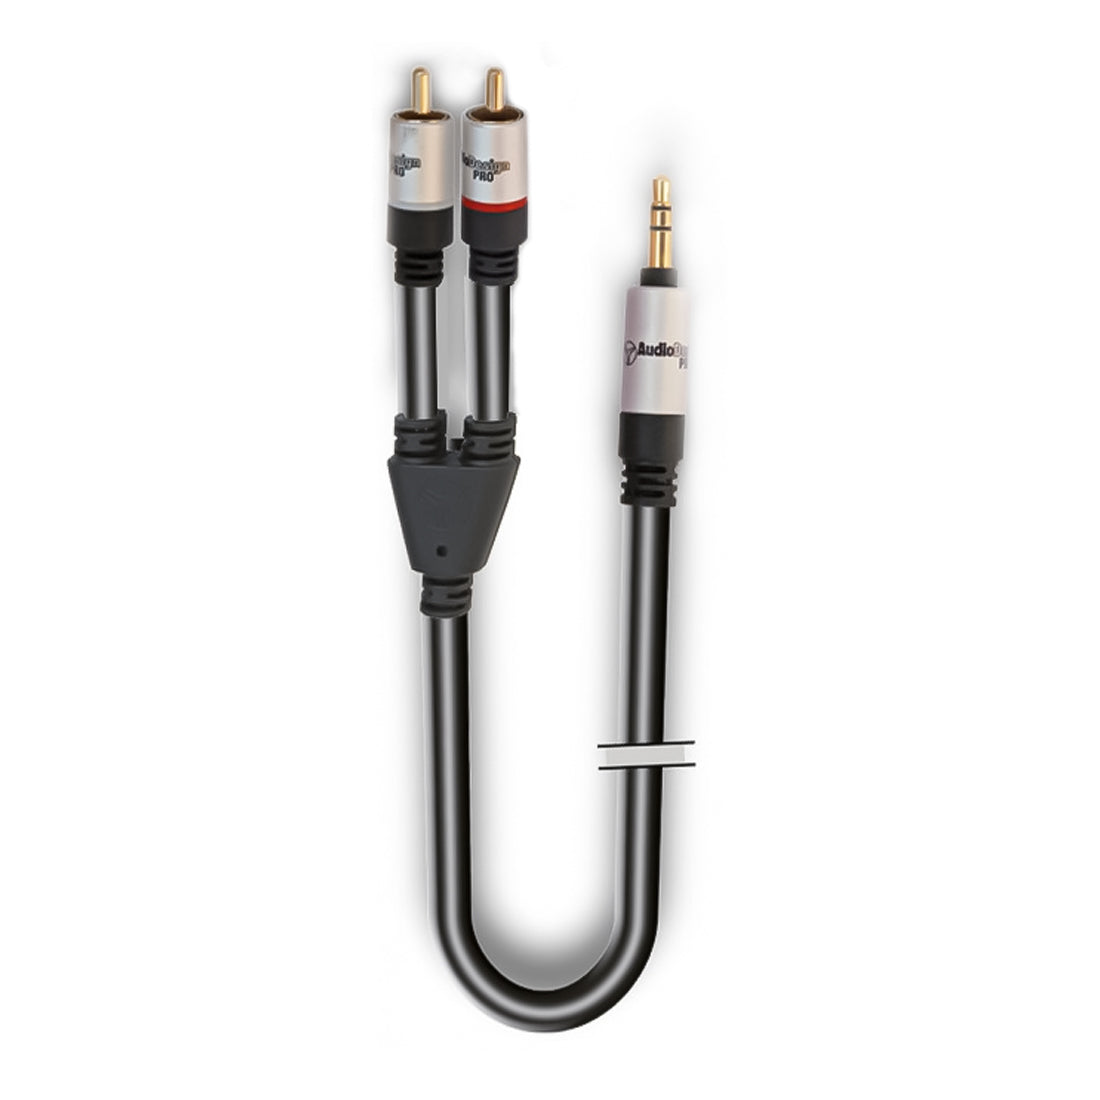 Audiodesign cavo audio adattatore X-Pro 1,5m convertitore da 1 Jack 3.5mm maschio a 2 RCA maschio